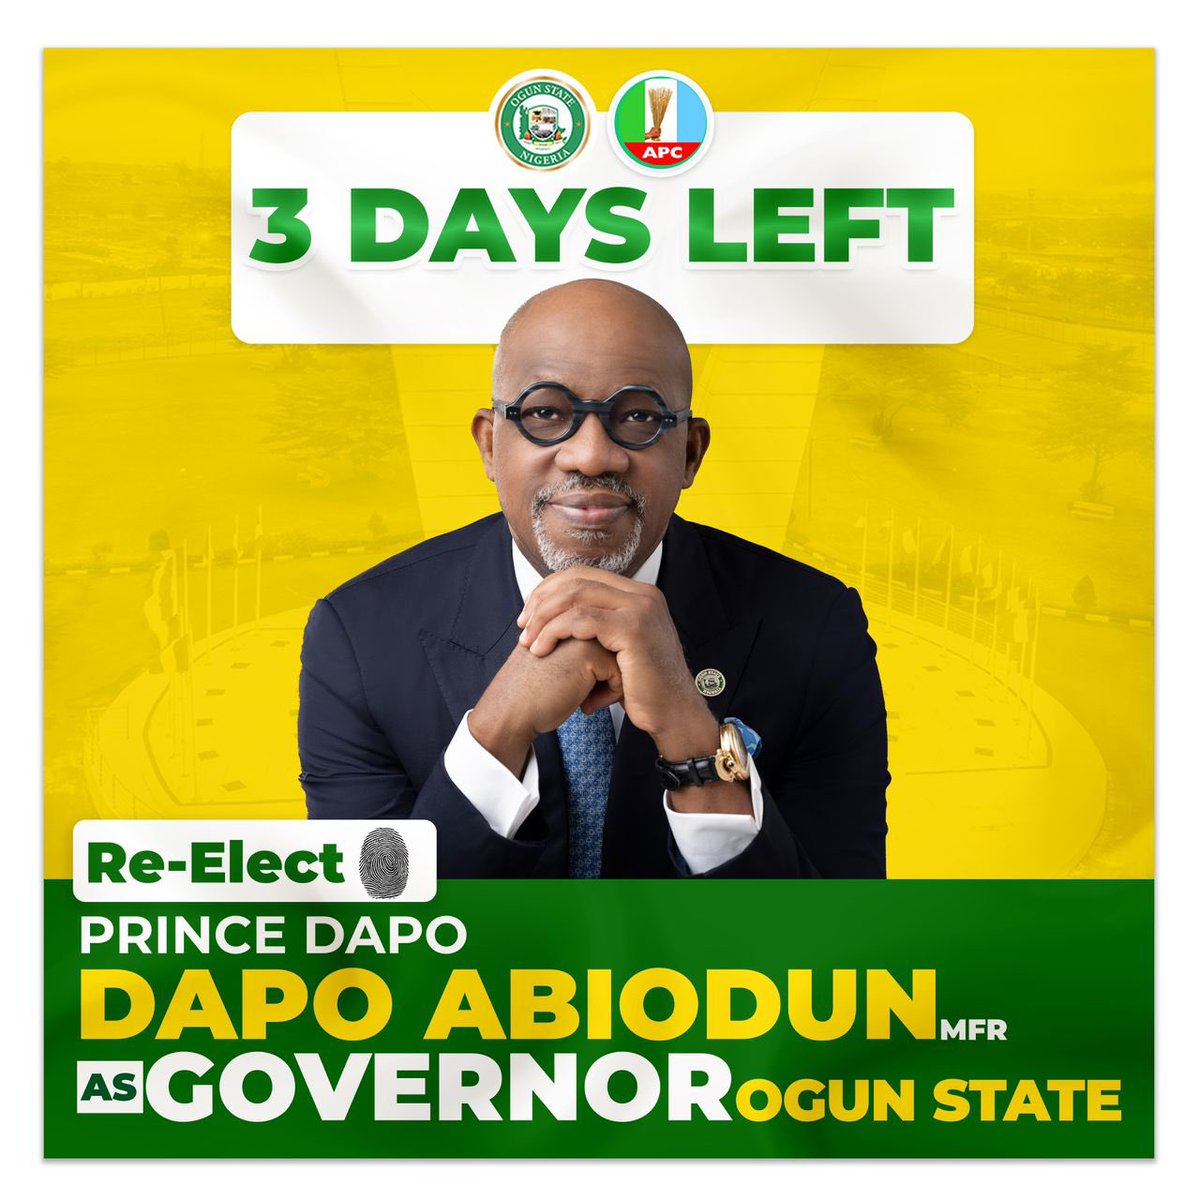 Ogun state voters, this coming Saturday, let’s re-elect Dapo Abiodun

#BuildingOurFutureTogether